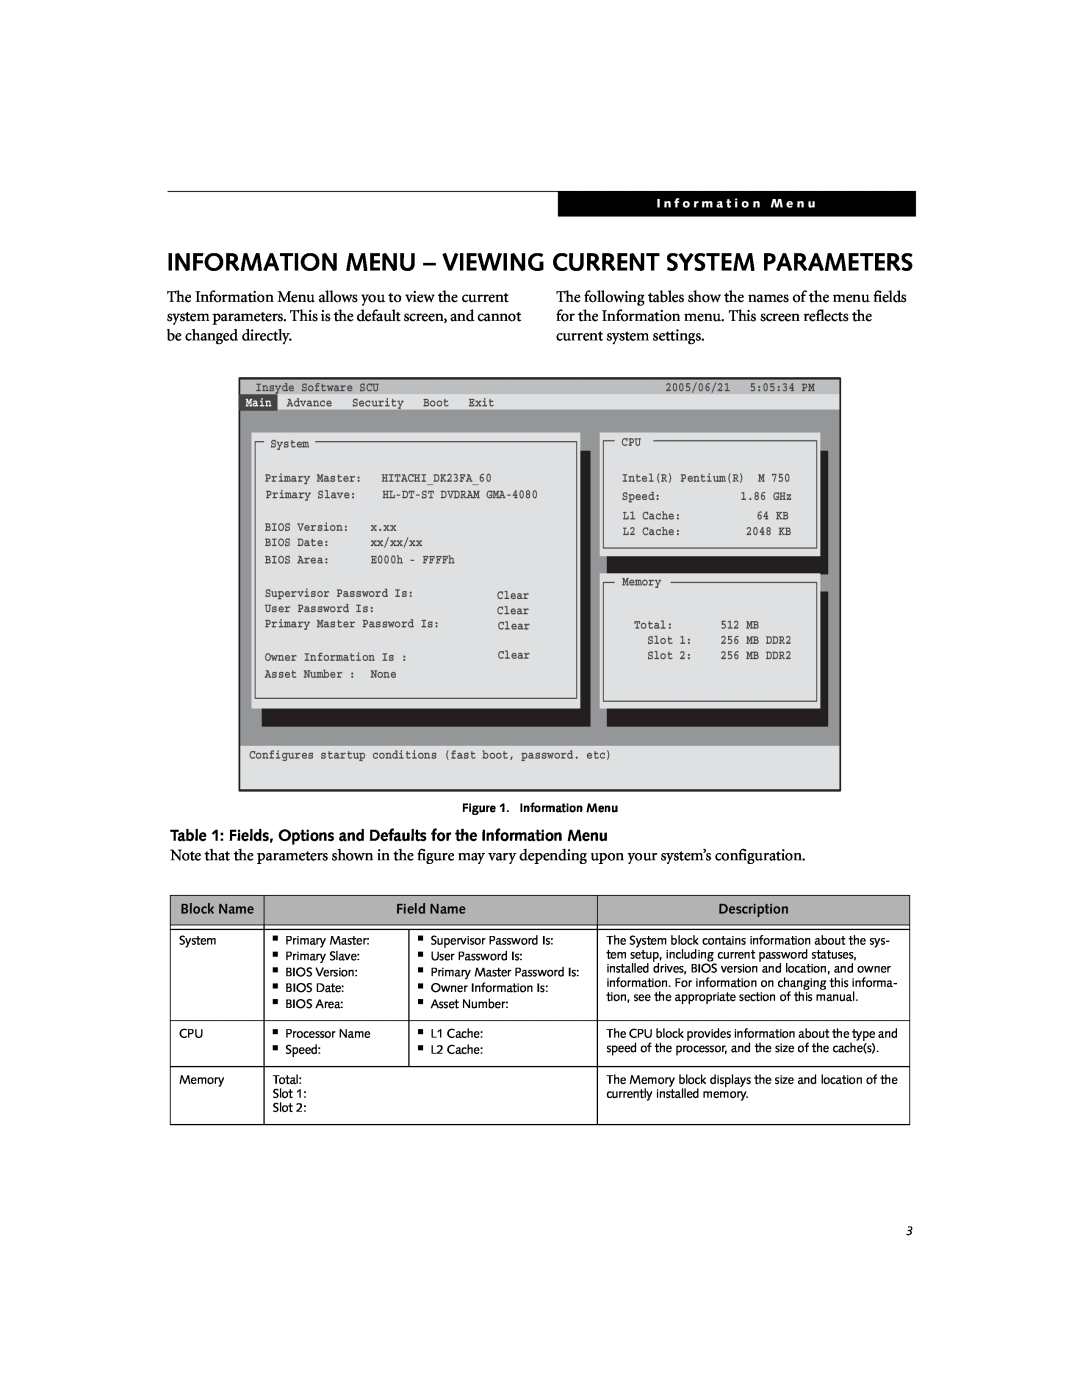 Fujitsu Siemens Computers N6210 manual Information Menu - Viewing Current System Parameters 